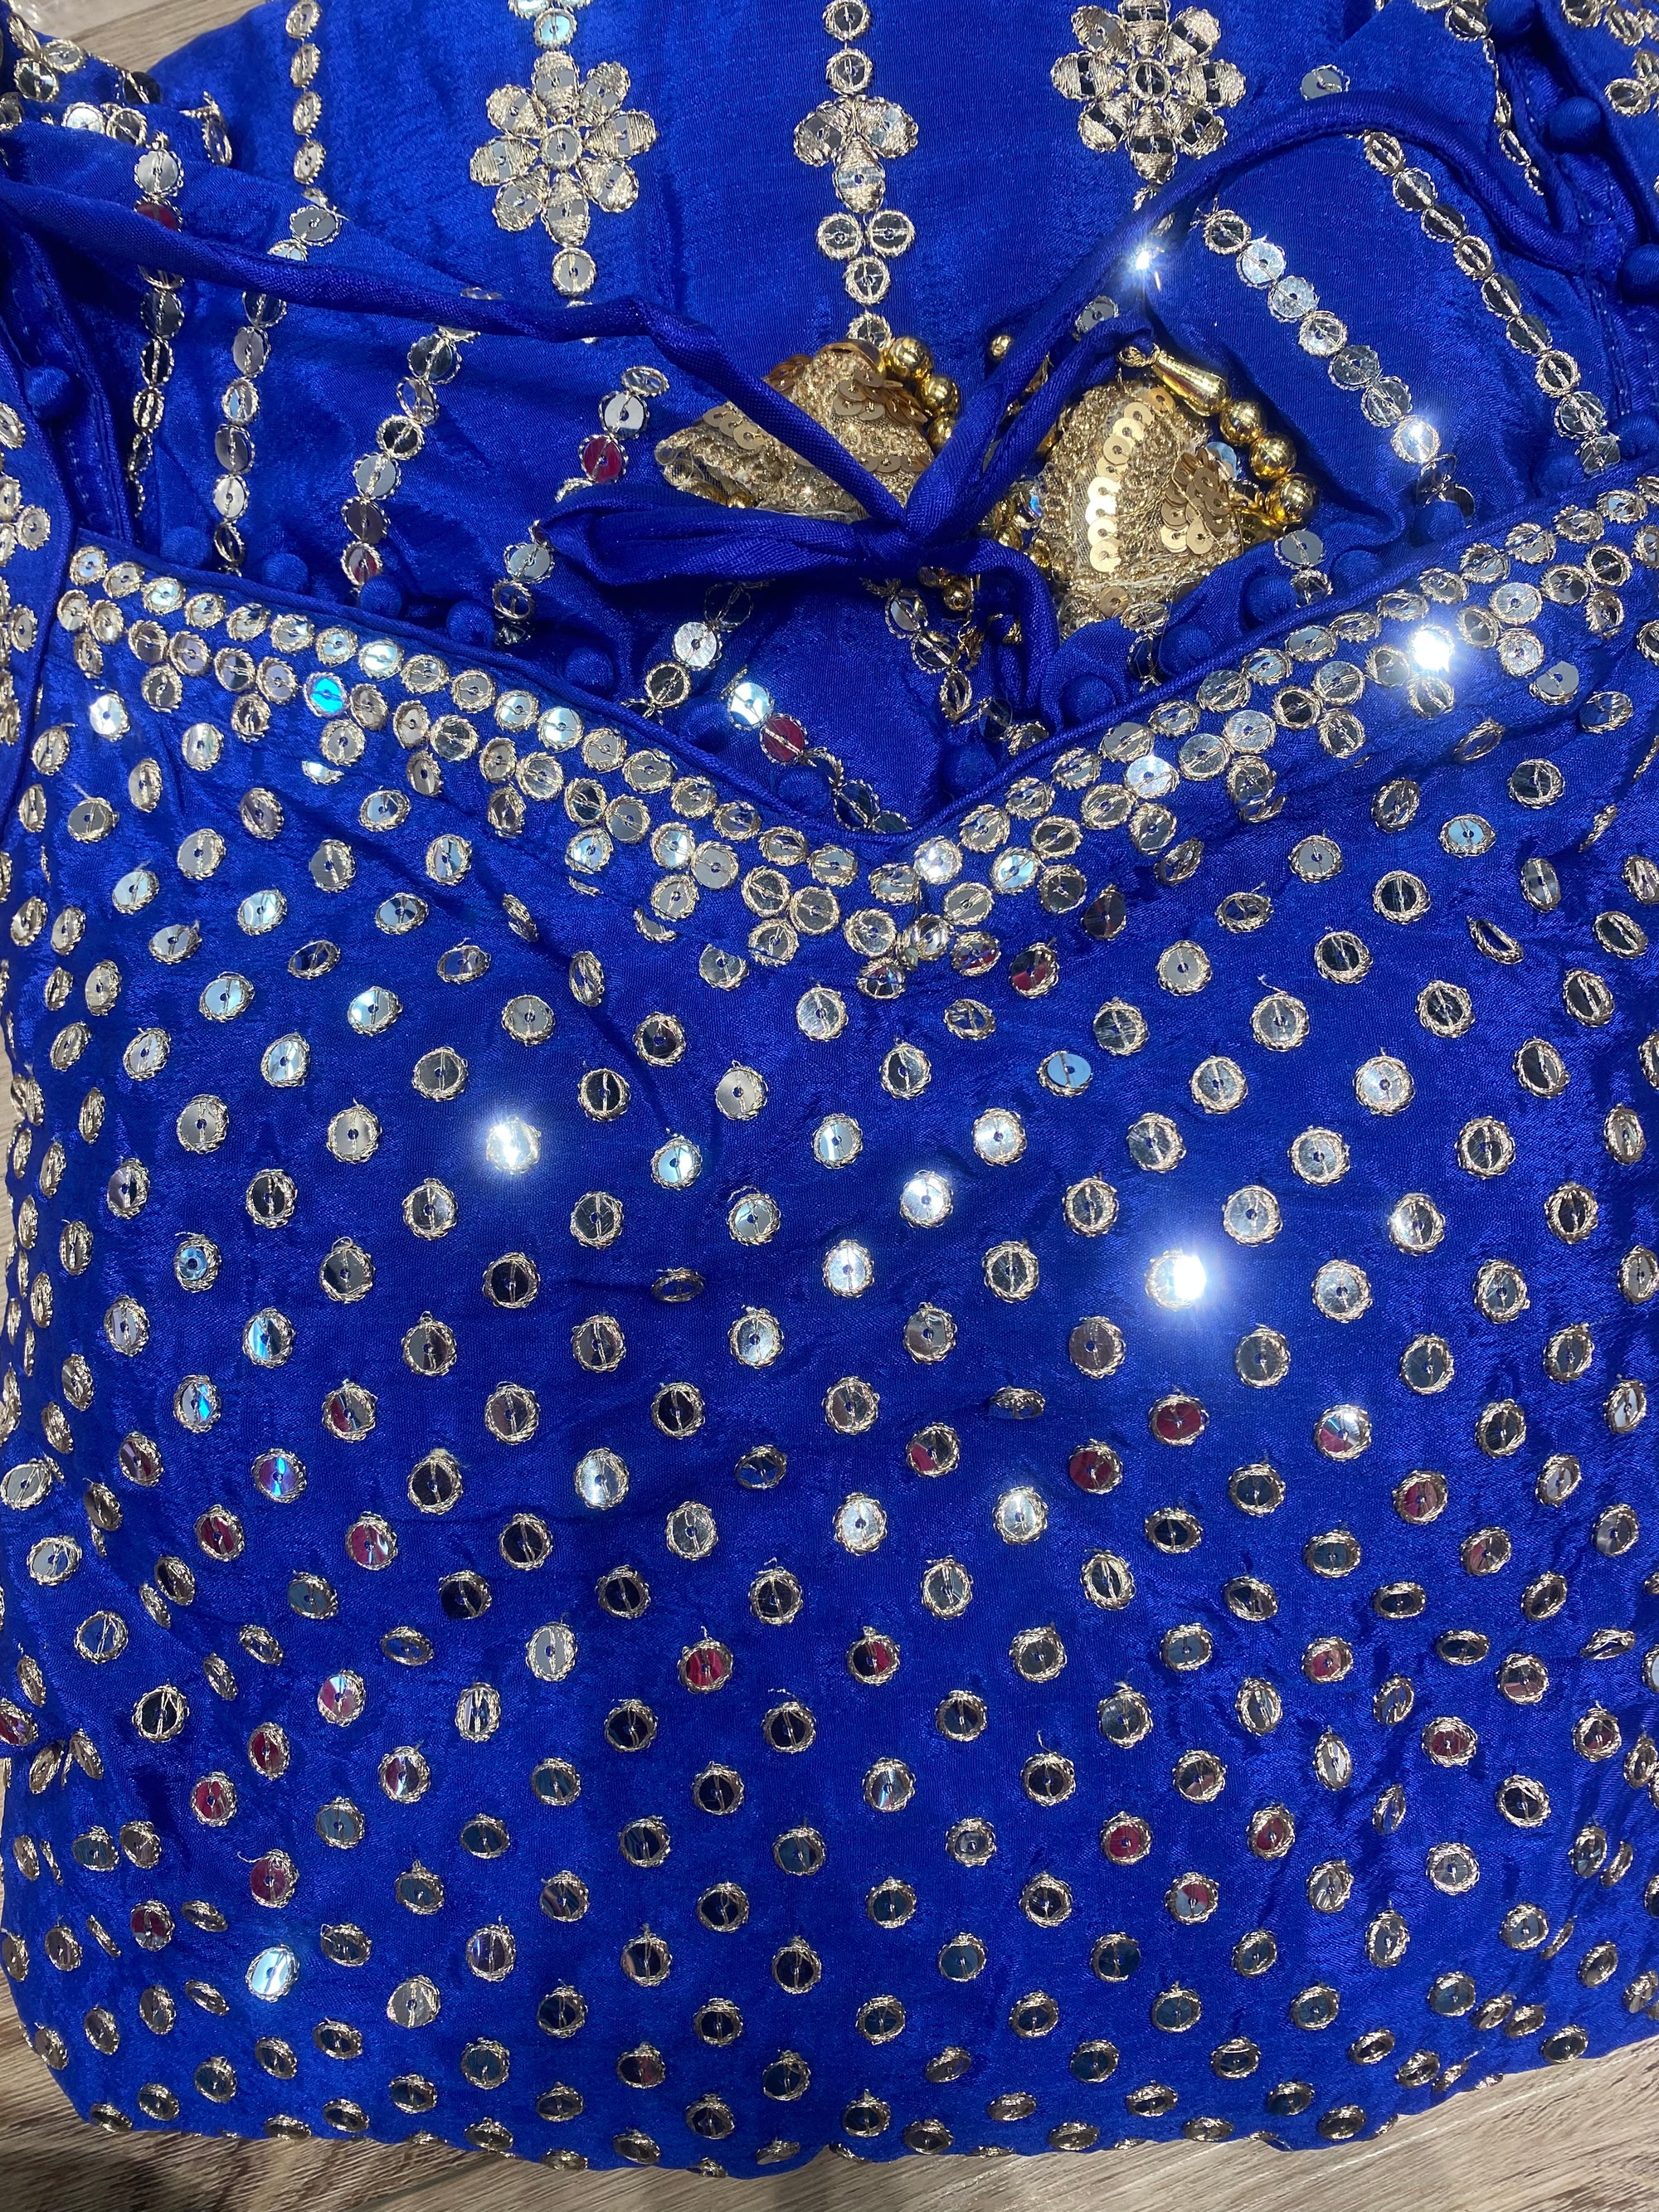 Steeply Embellished Gharara Suit